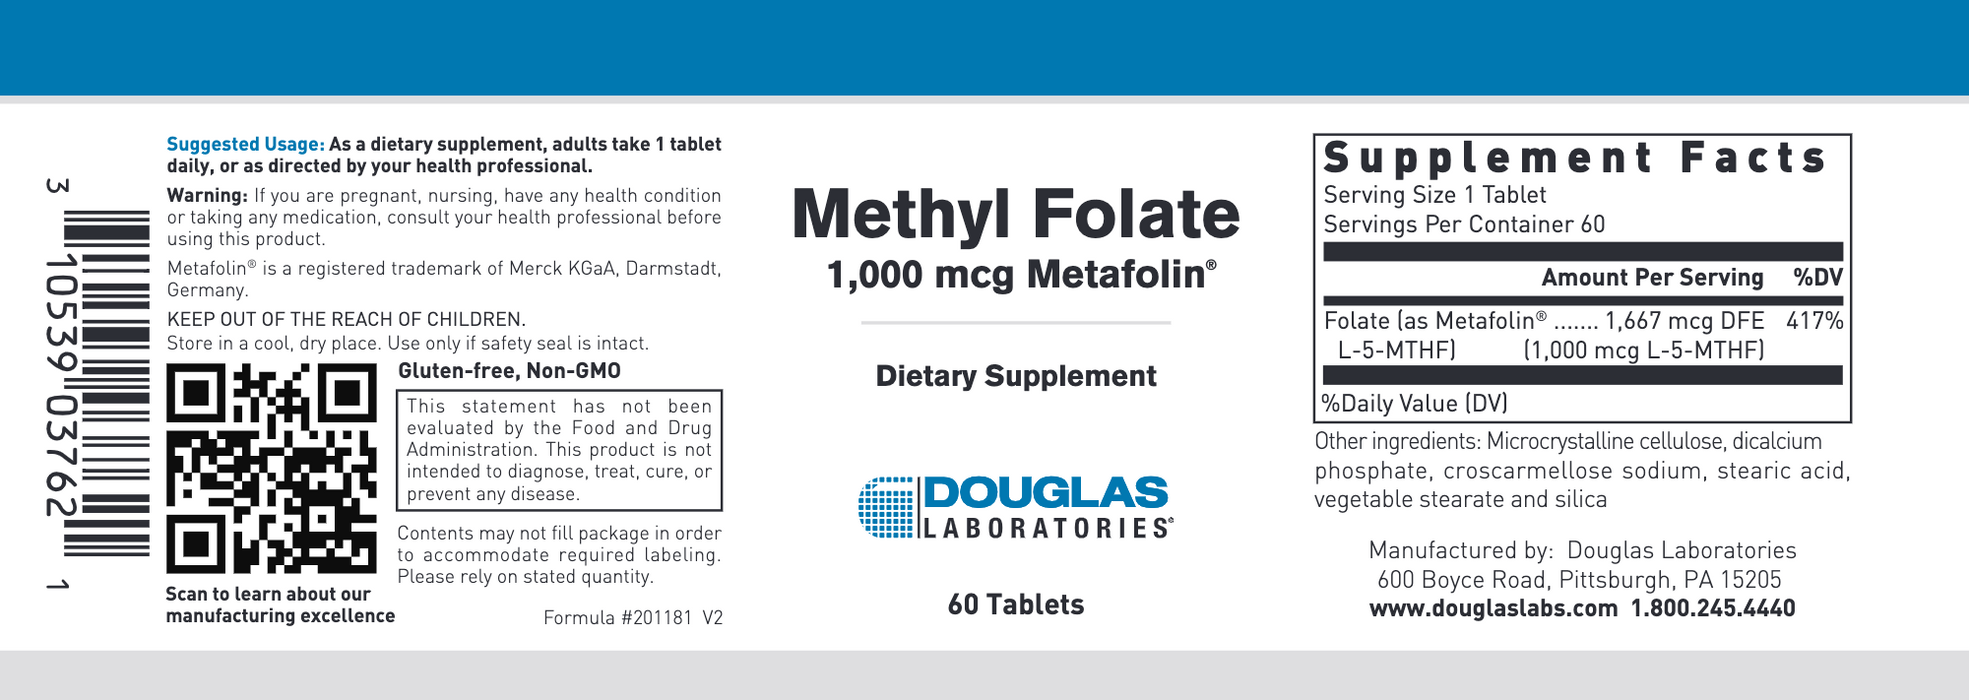 Methyl Folate (L-5-MTHF) (60 Tablets)-Douglas Laboratories-Pine Street Clinic